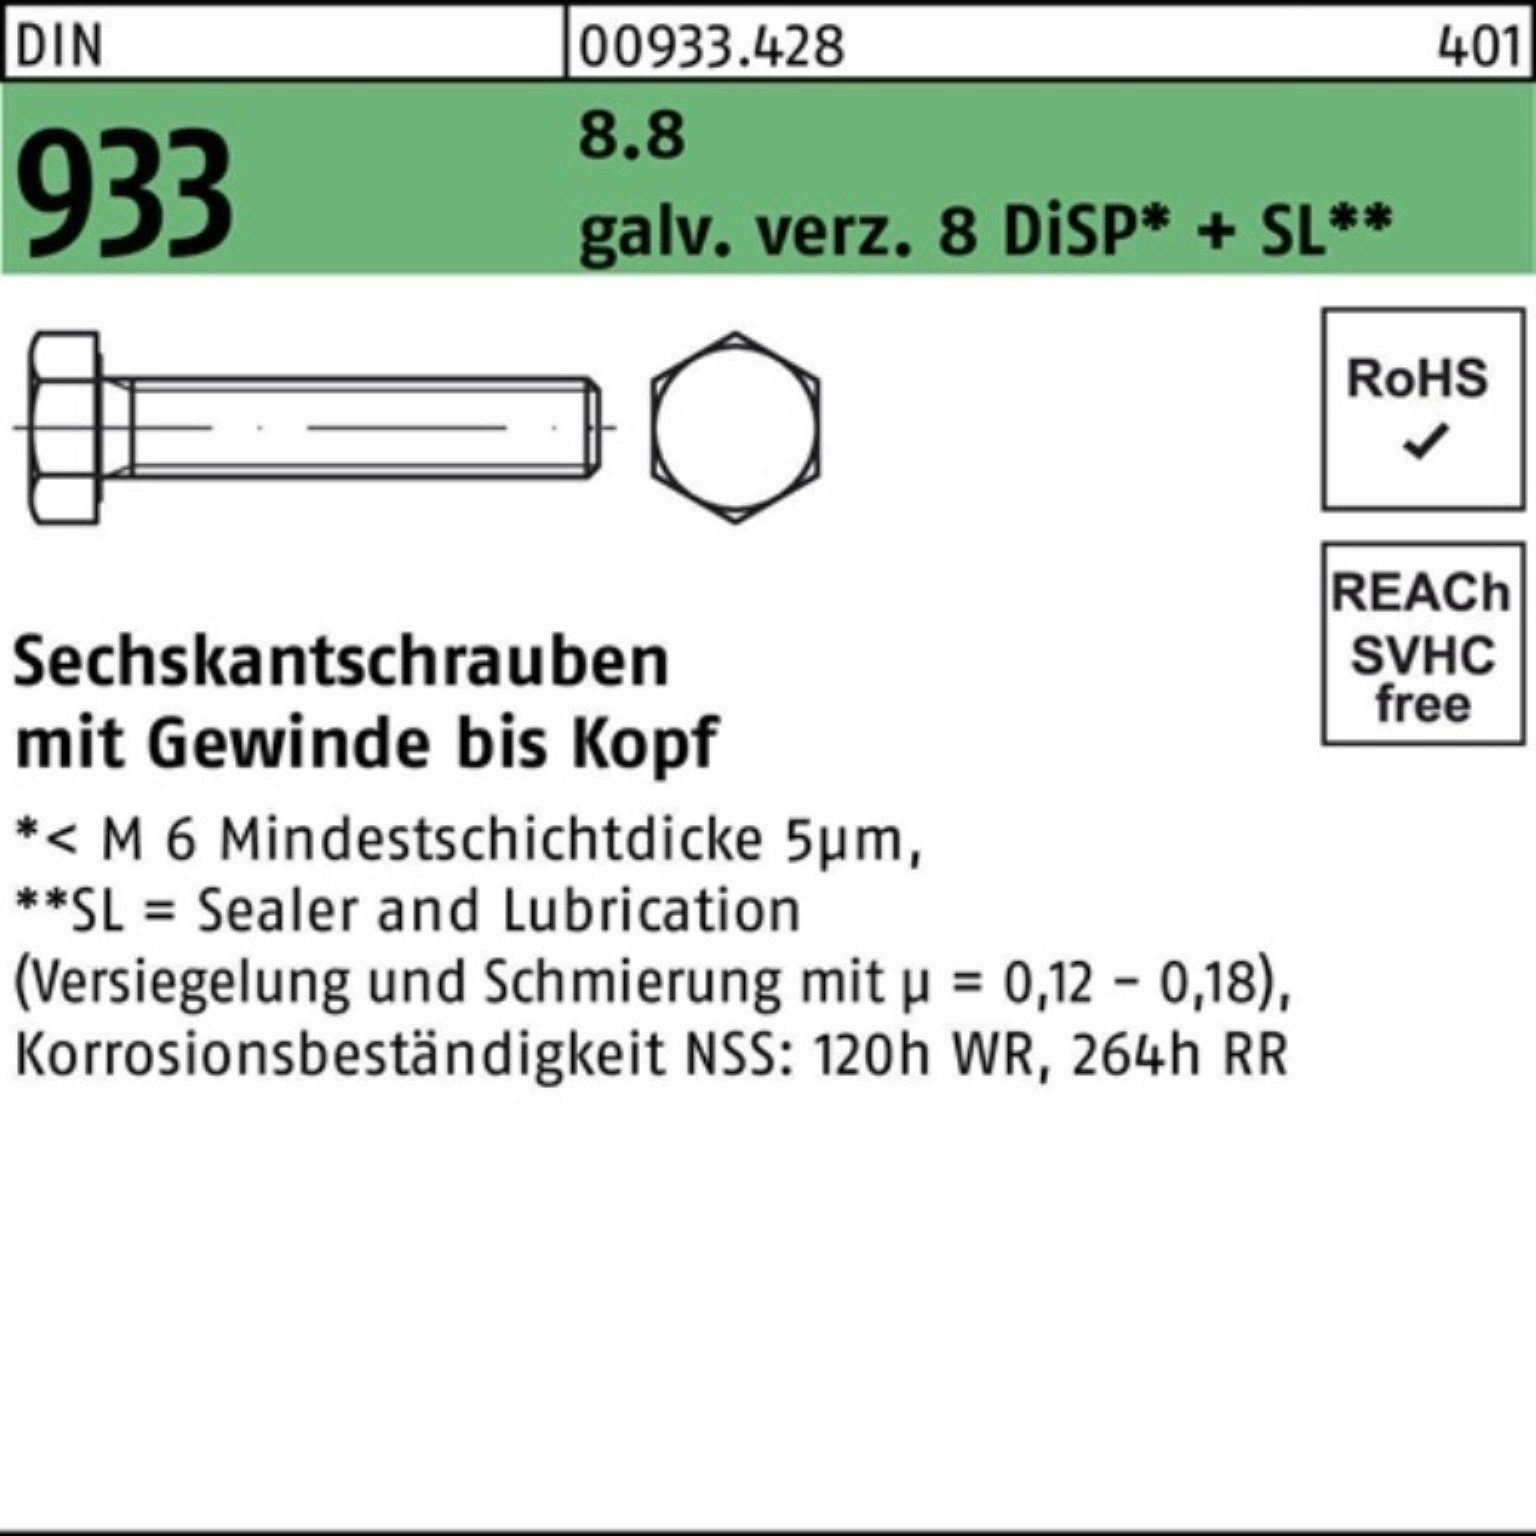 Reyher Sechskantschraube 100er Pack Sechskantschraube 85 VG Zn 933 DiSP + M16x 8.8 DIN SL 8 gal